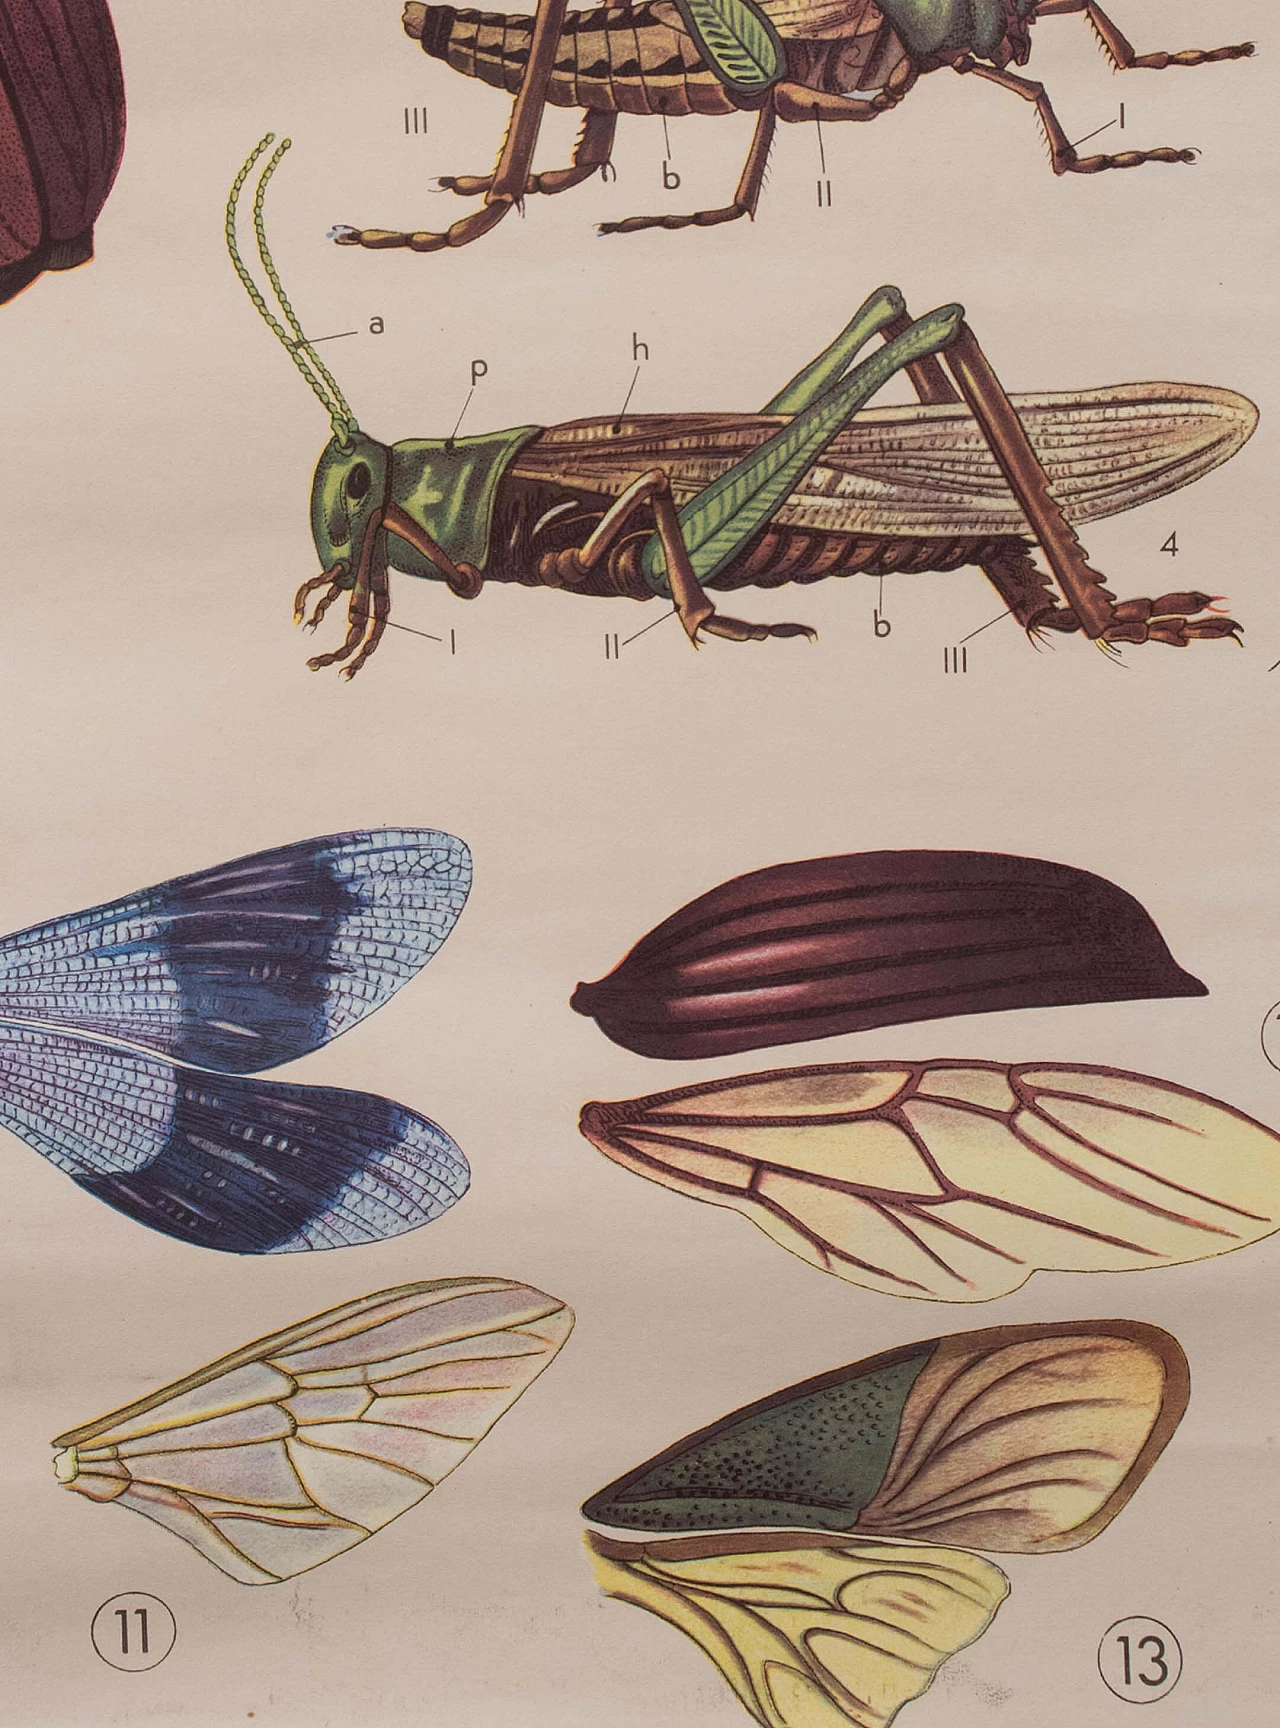 Stampa didattica a tema insetti, Paravia, 1968 1088777